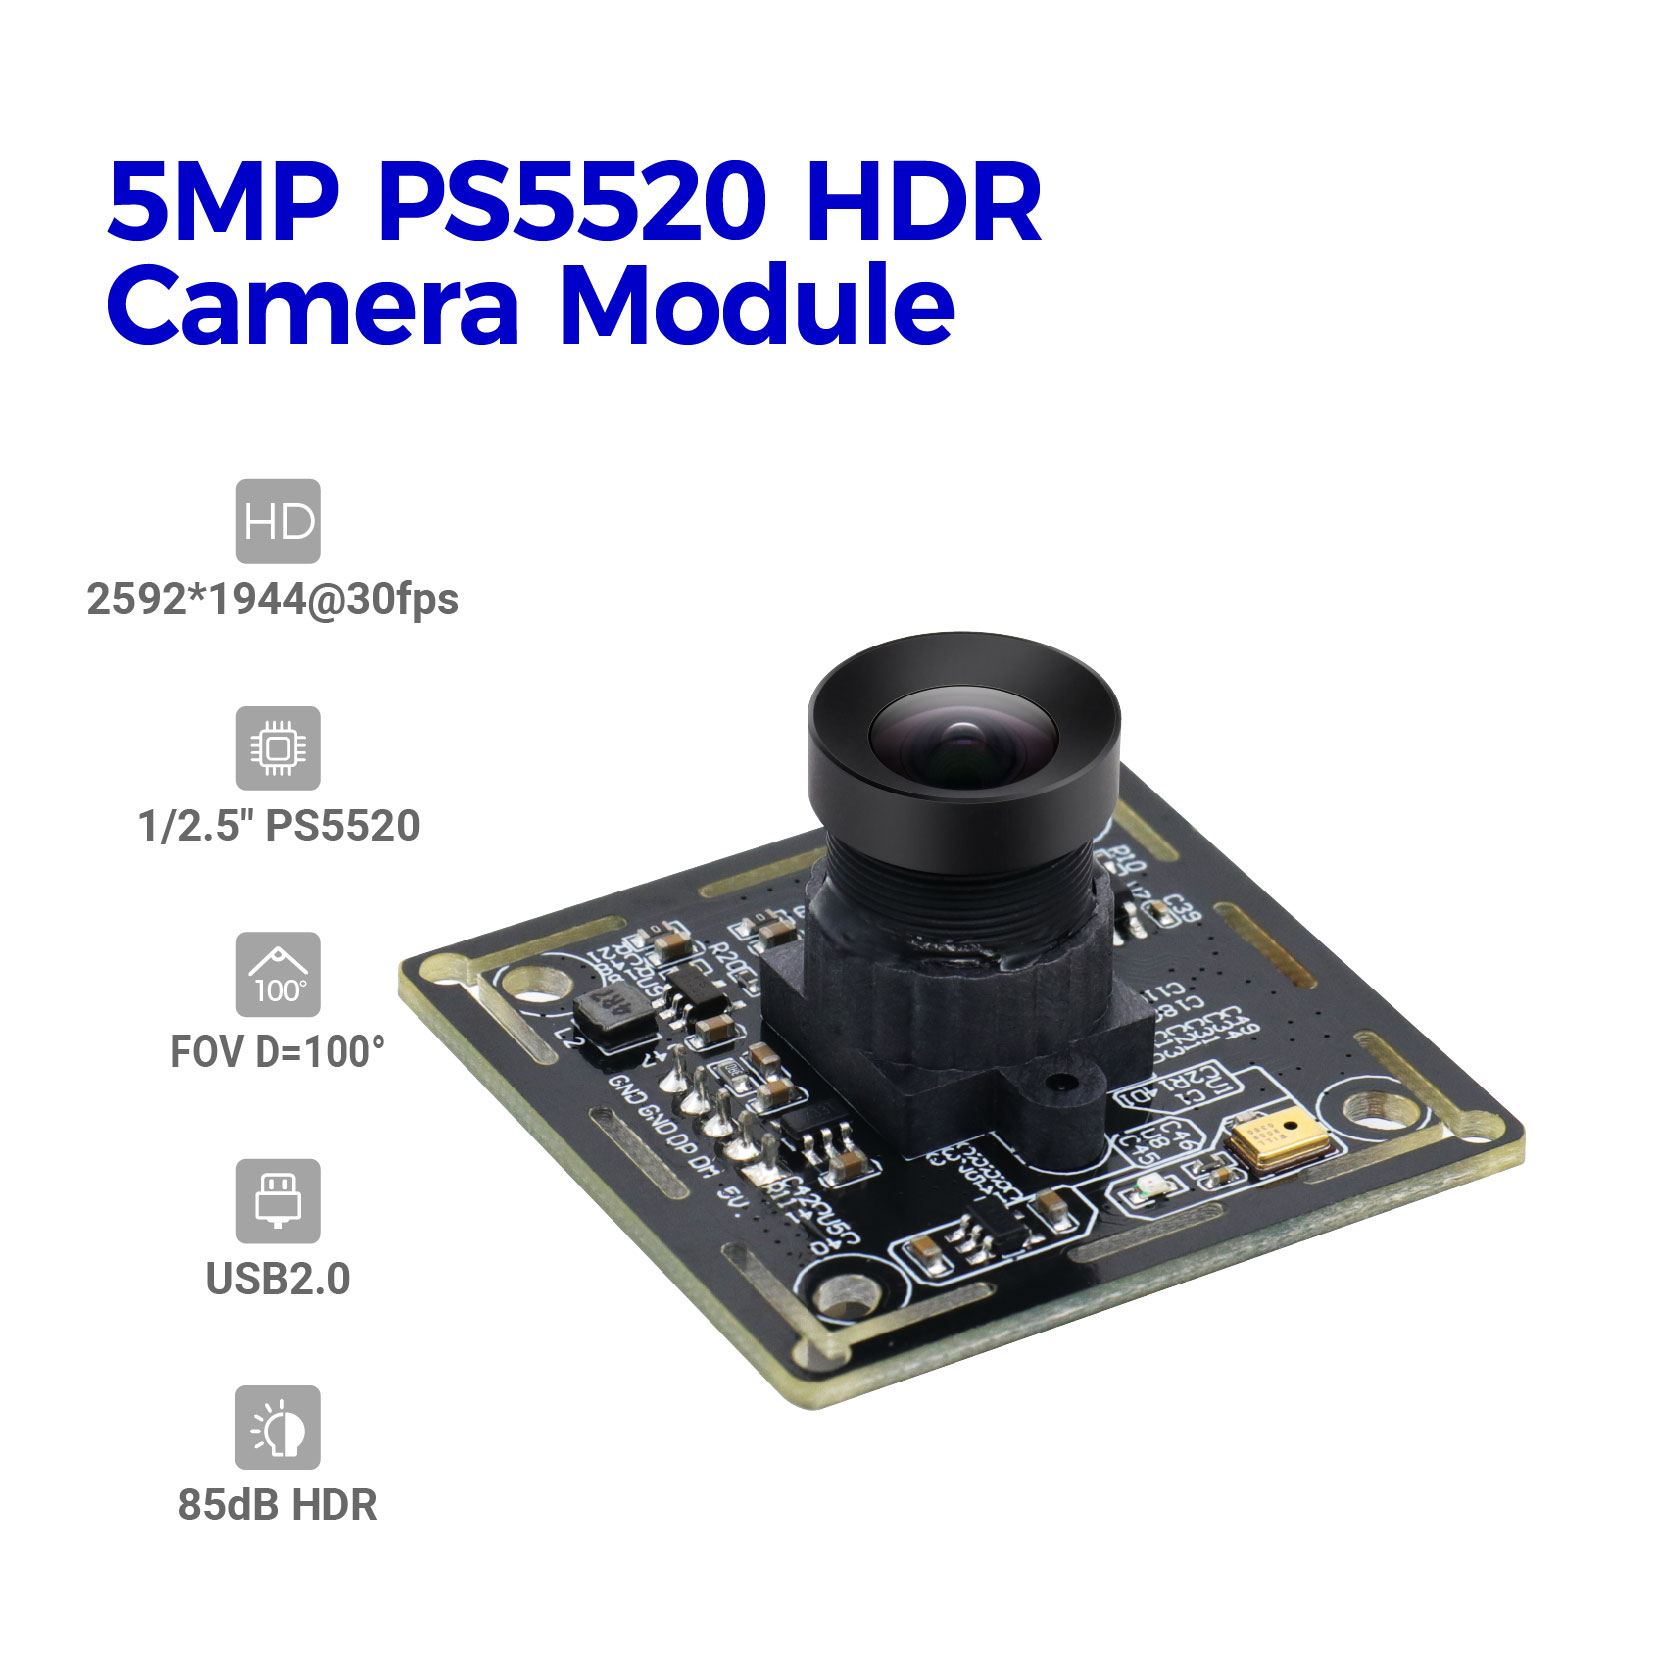 Модуль камеры 5MP PS5520 HDR